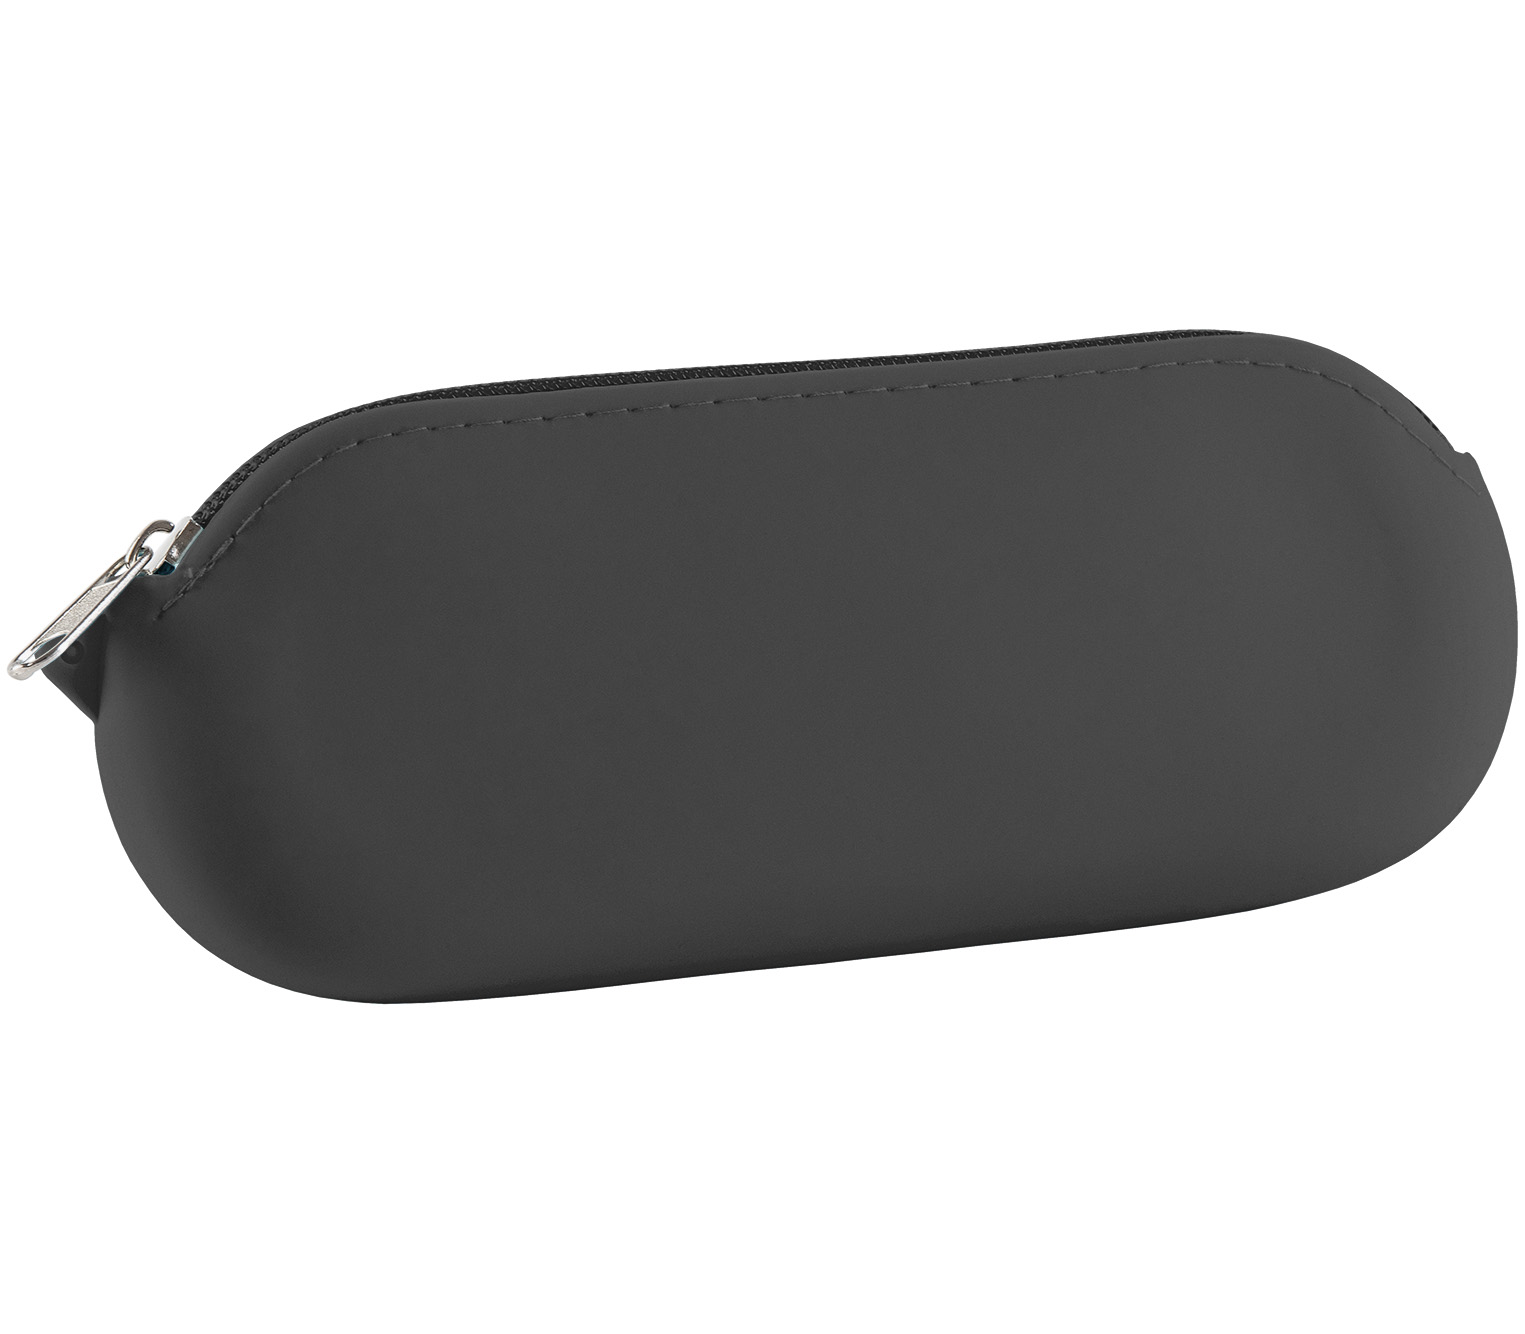 Main Image (Angle) - Buzz (Black) Glasses Cases Accessories